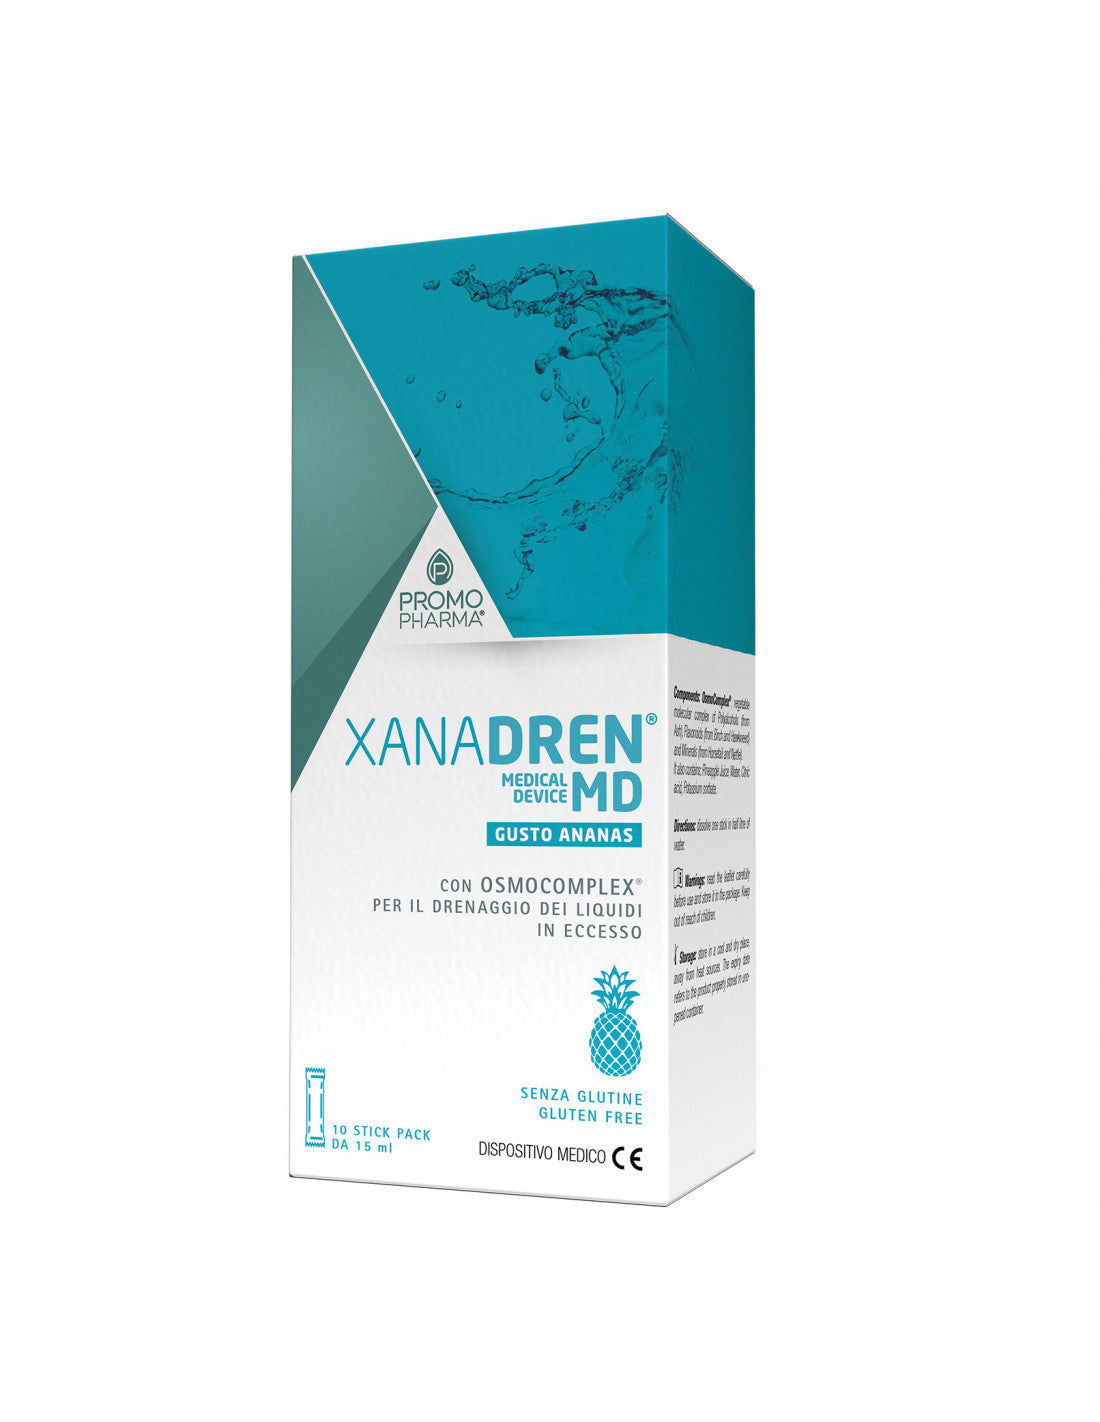 Xanadrenn MD Arancia 10 Stick